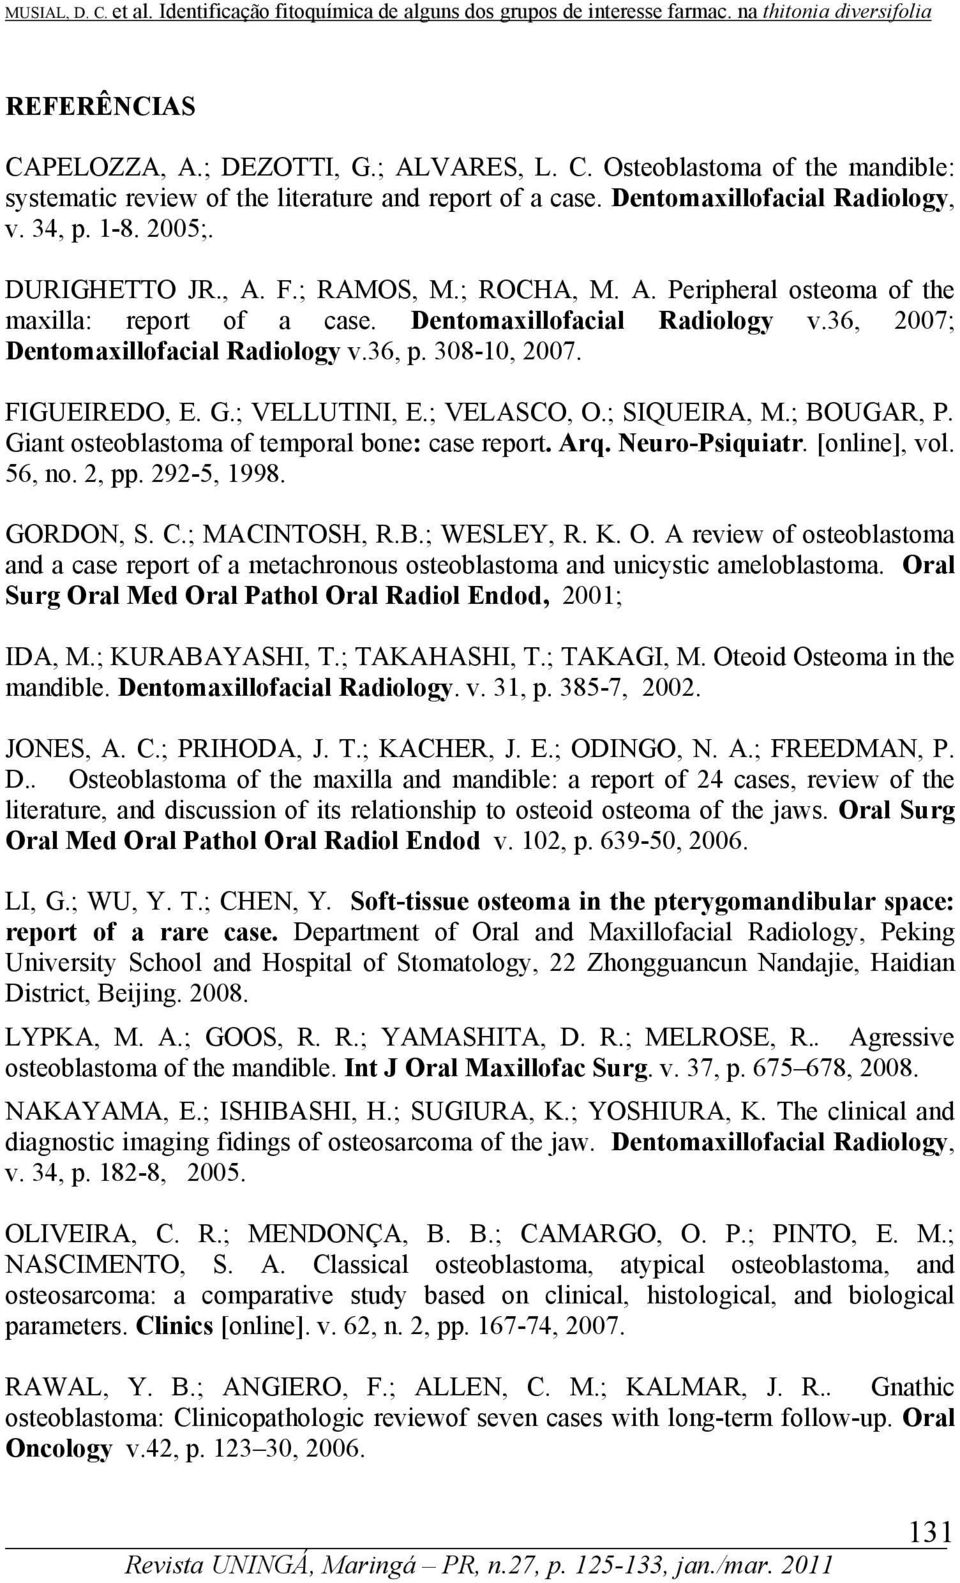 36, 2007; Dentomaxillofacial Radiology v.36, p. 308-10, 2007. FIGUEIREDO, E. G.; VELLUTINI, E.; VELASCO, O.; SIQUEIRA, M.; BOUGAR, P. Giant osteoblastoma of temporal bone: case report. Arq.